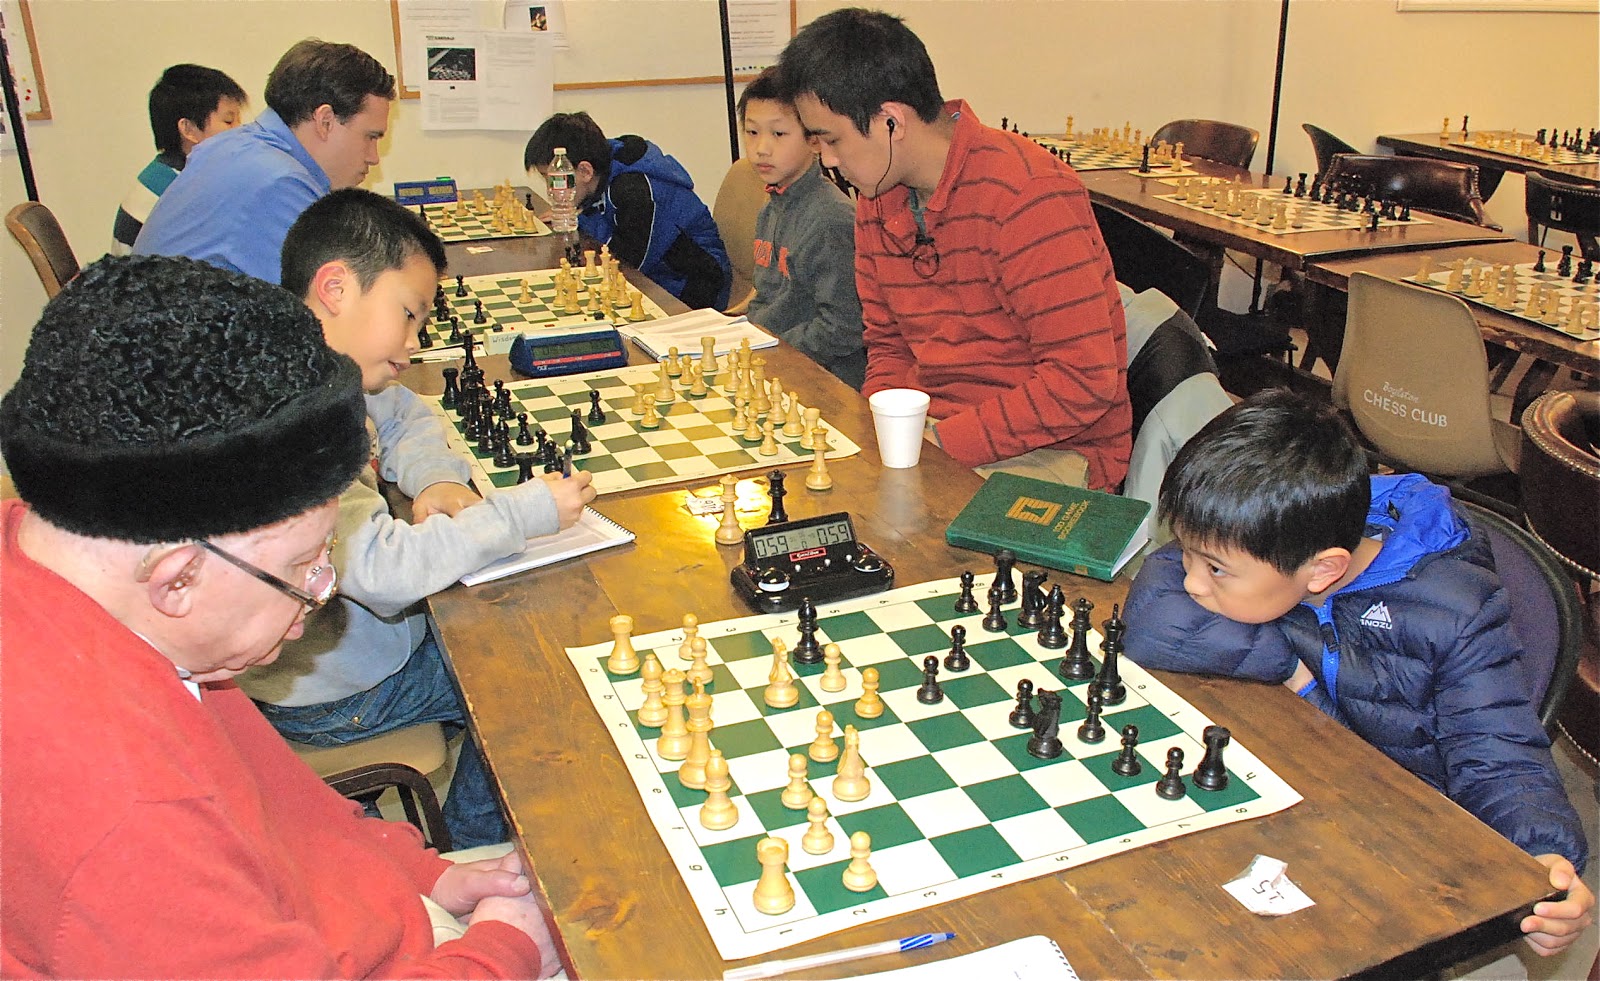 B C Chess Club - The people's champion, Mikhail Tal